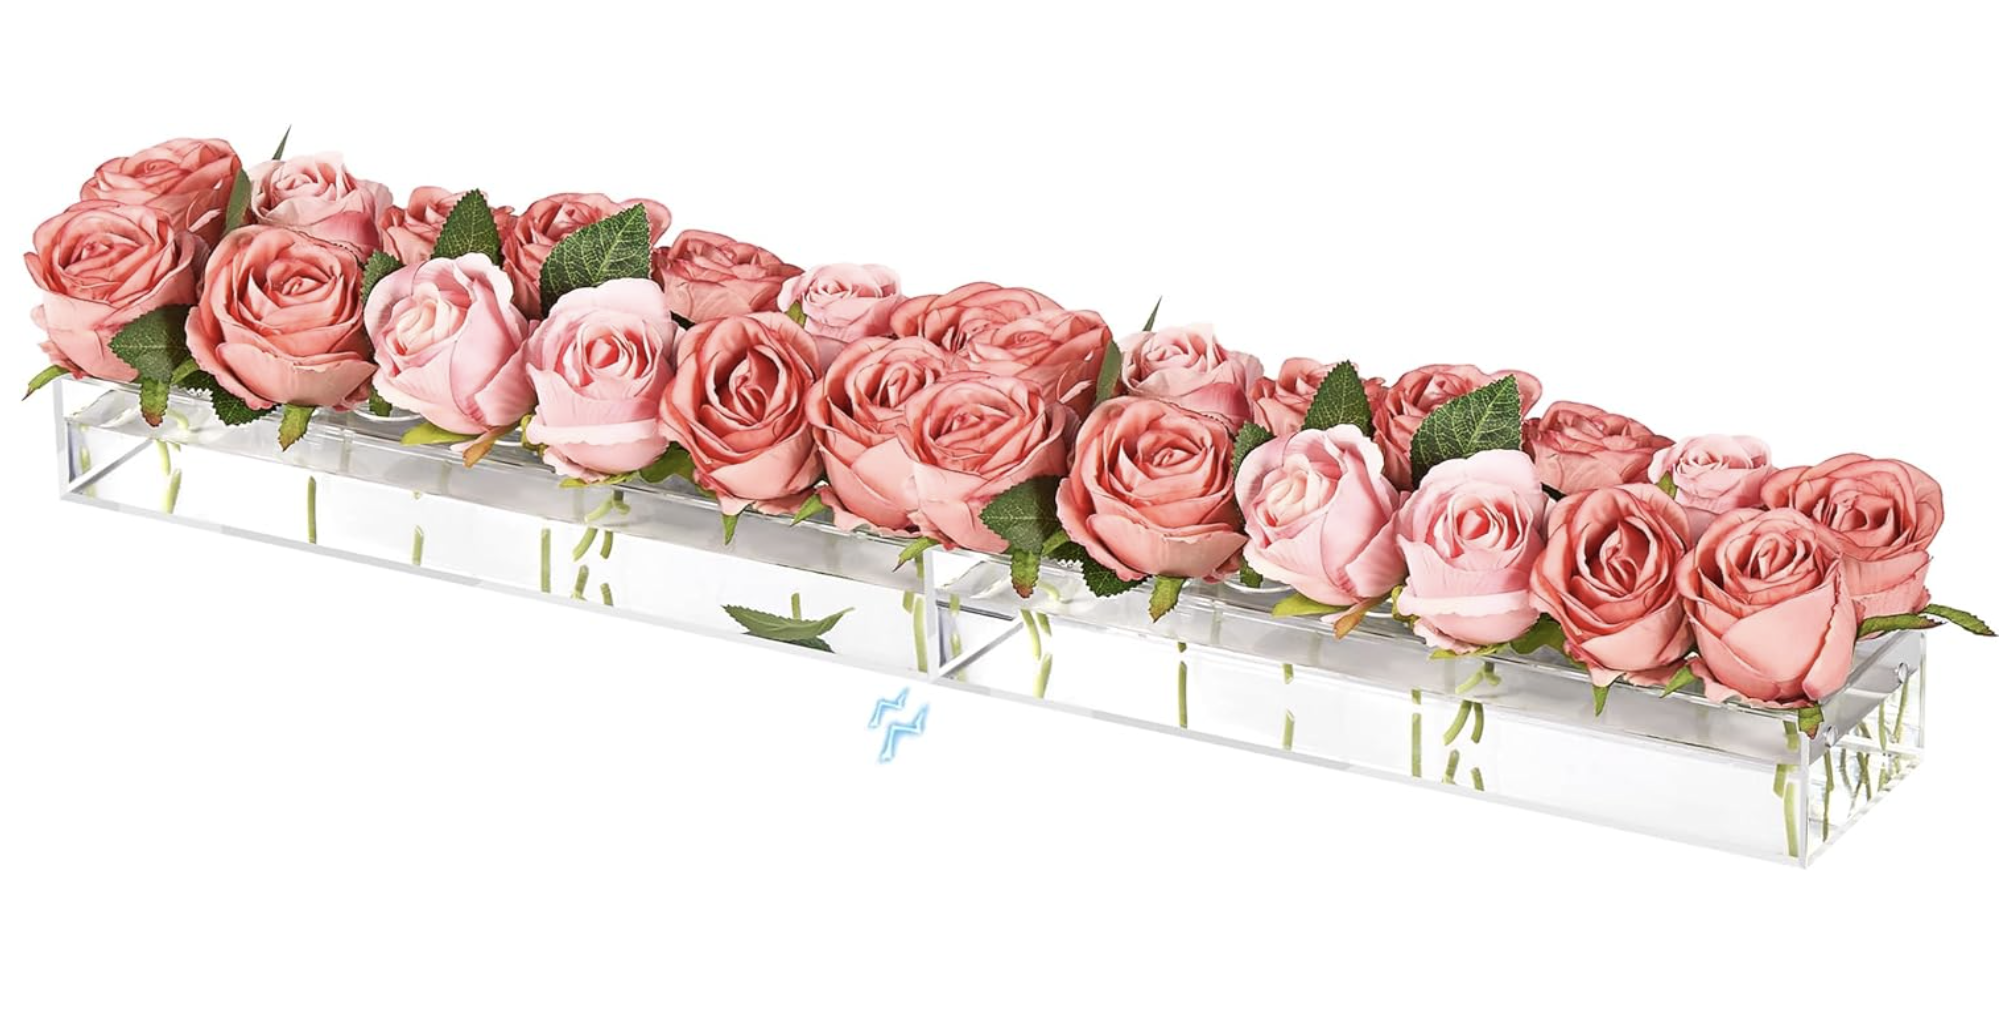 acrylic rectangular floral vase - amazon